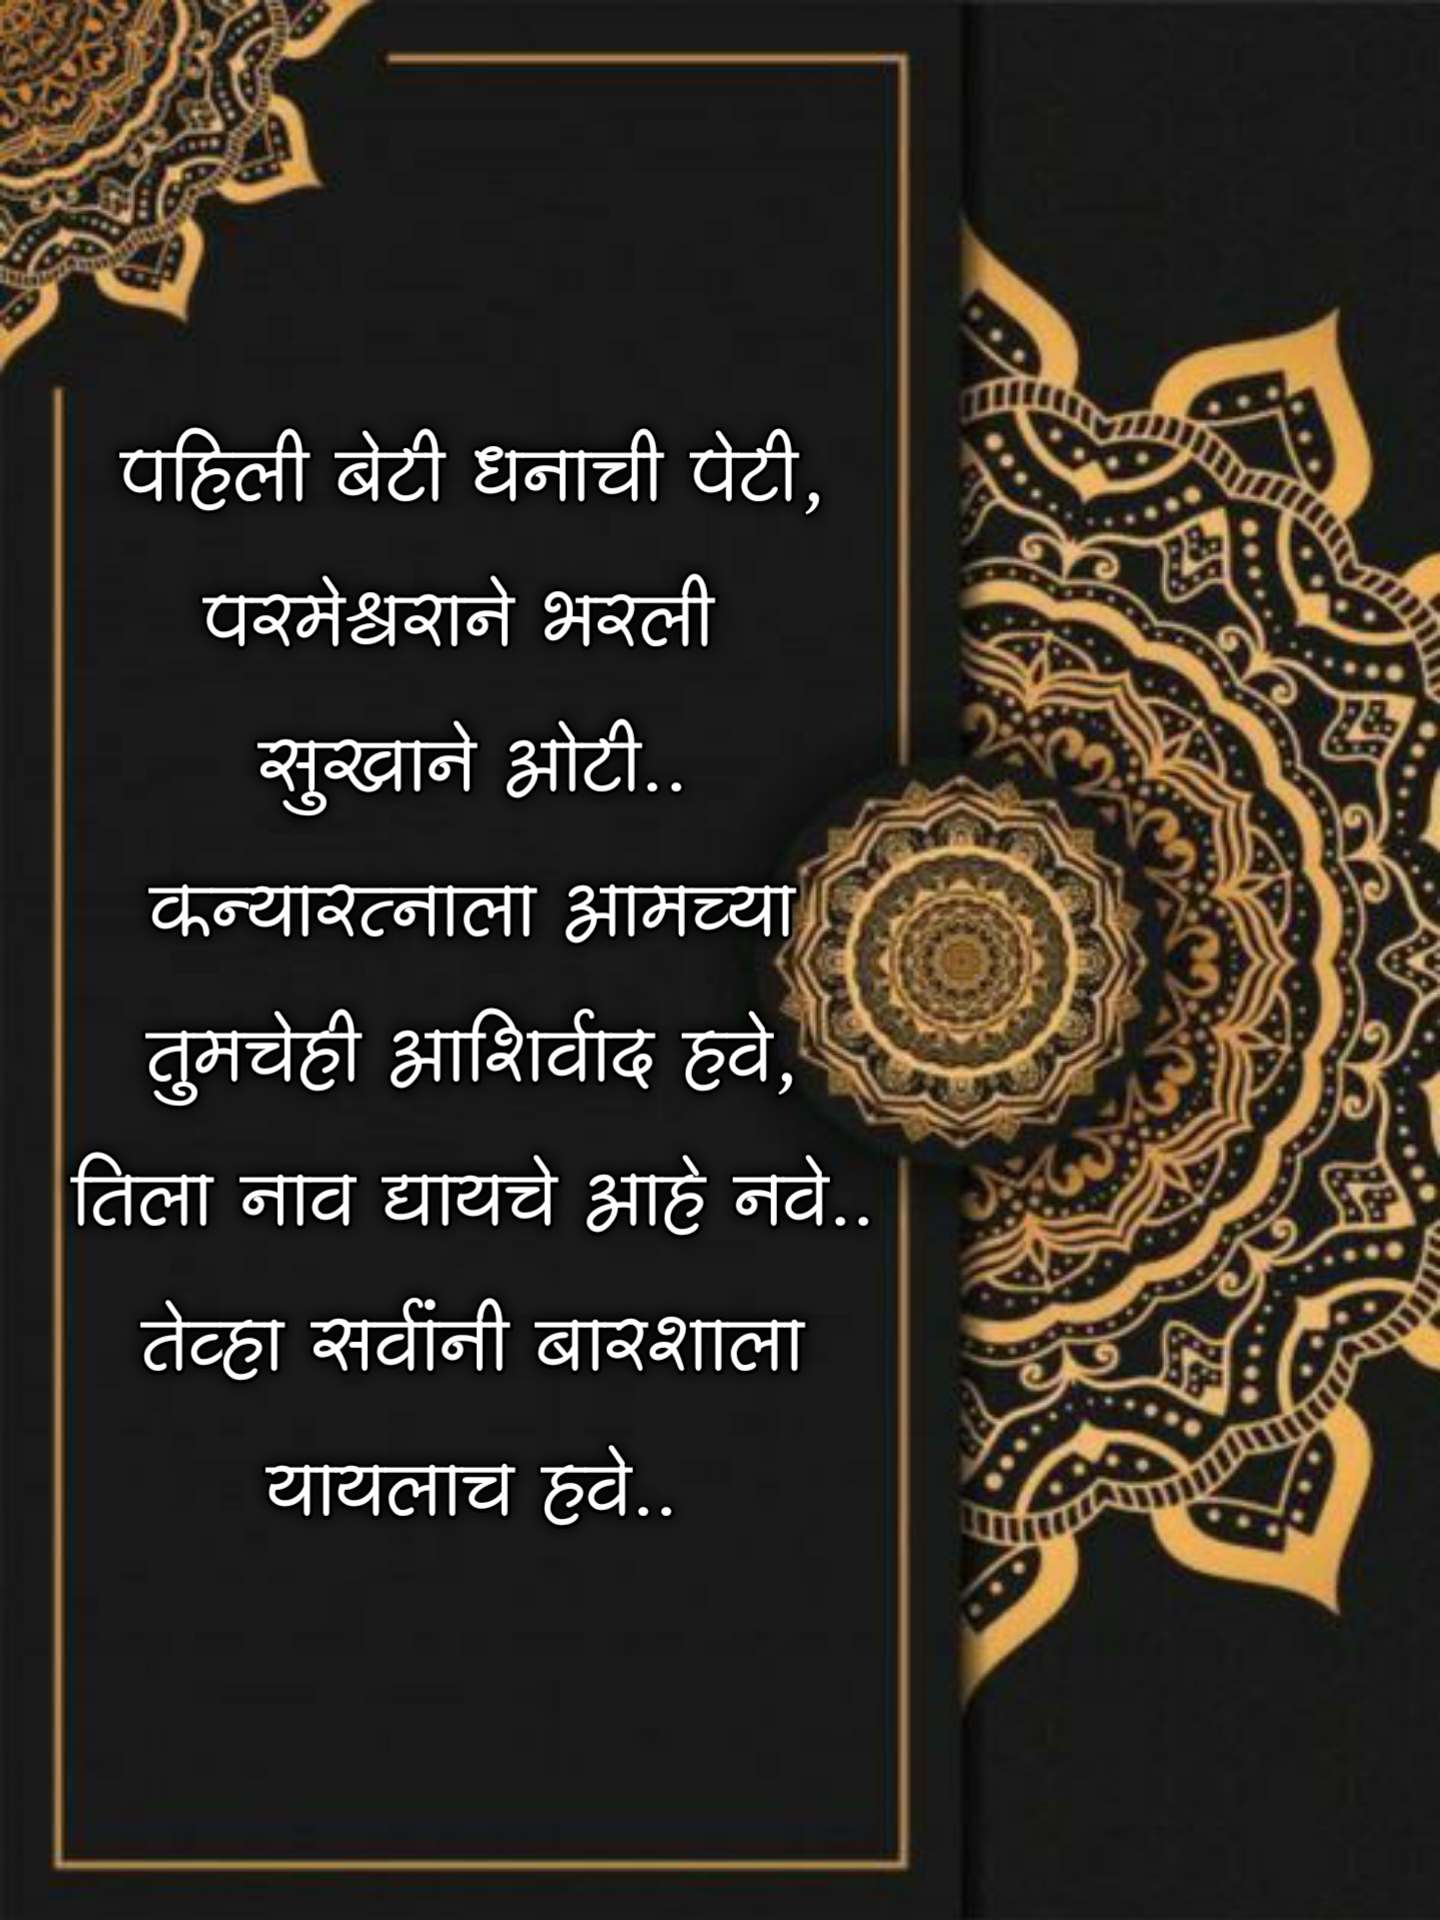 Barsa Invitation Card In Marathi 9 -